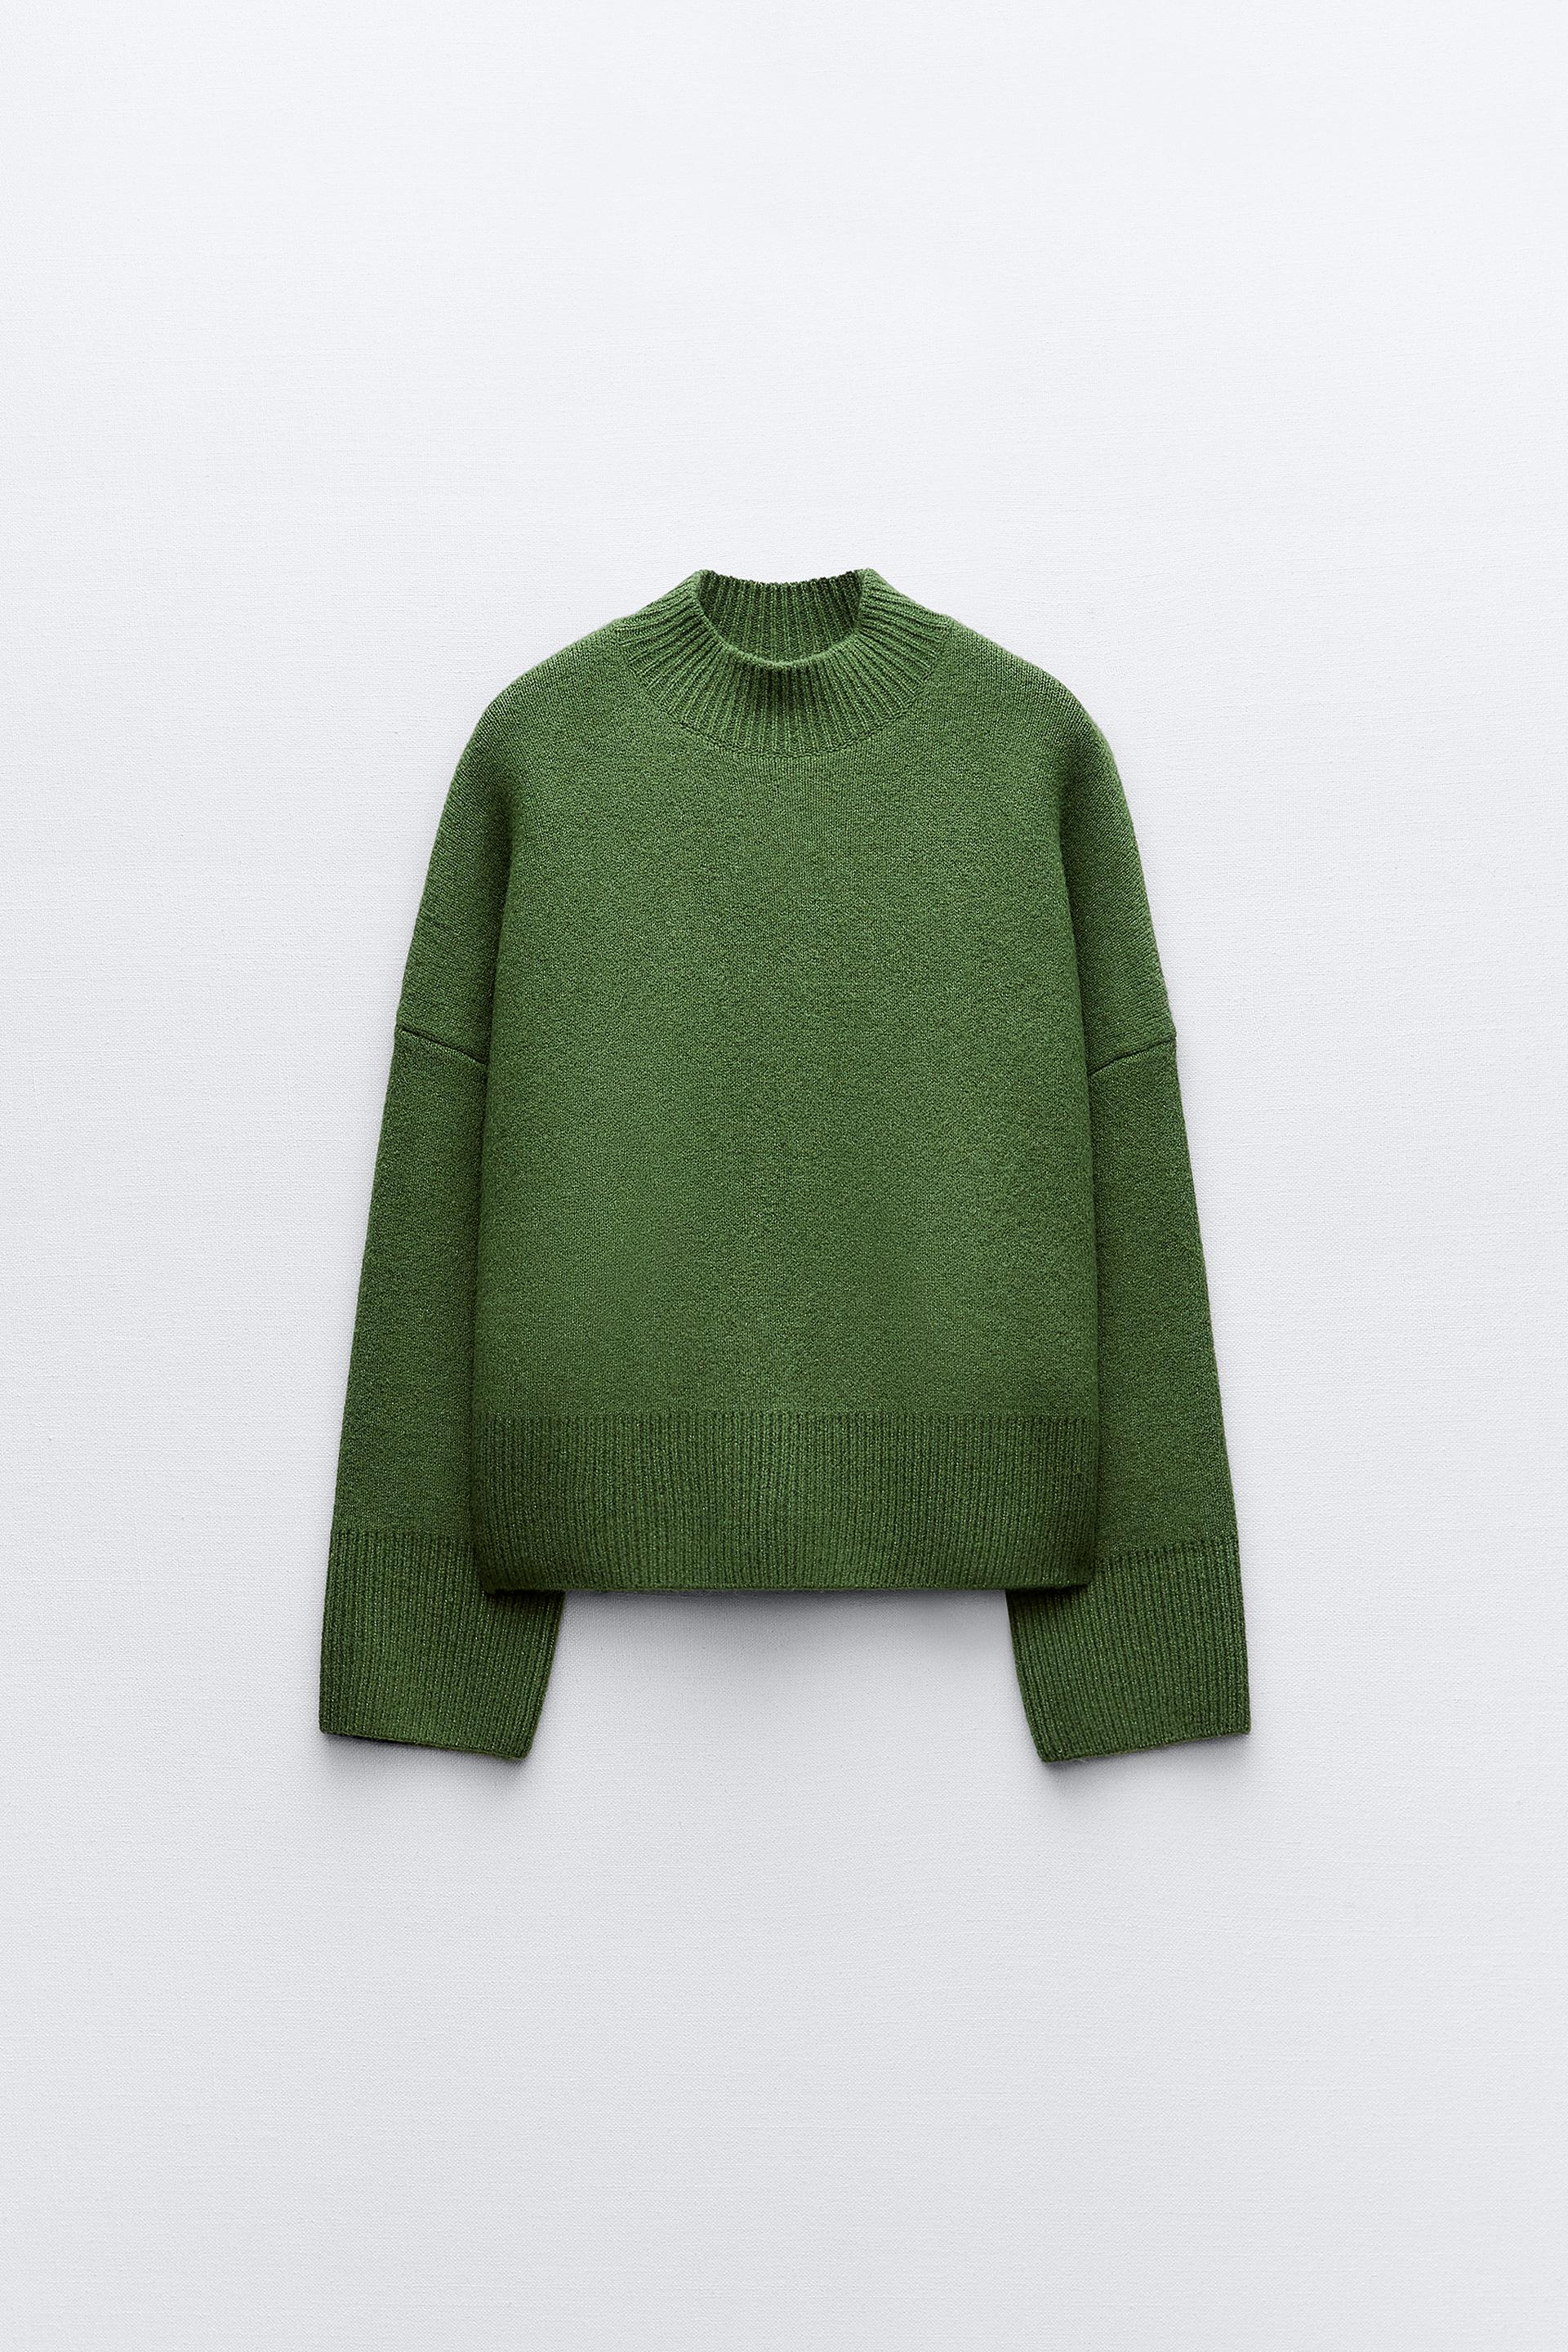 Zara - Ribbed Knit Olive Green on Designer Wardrobe